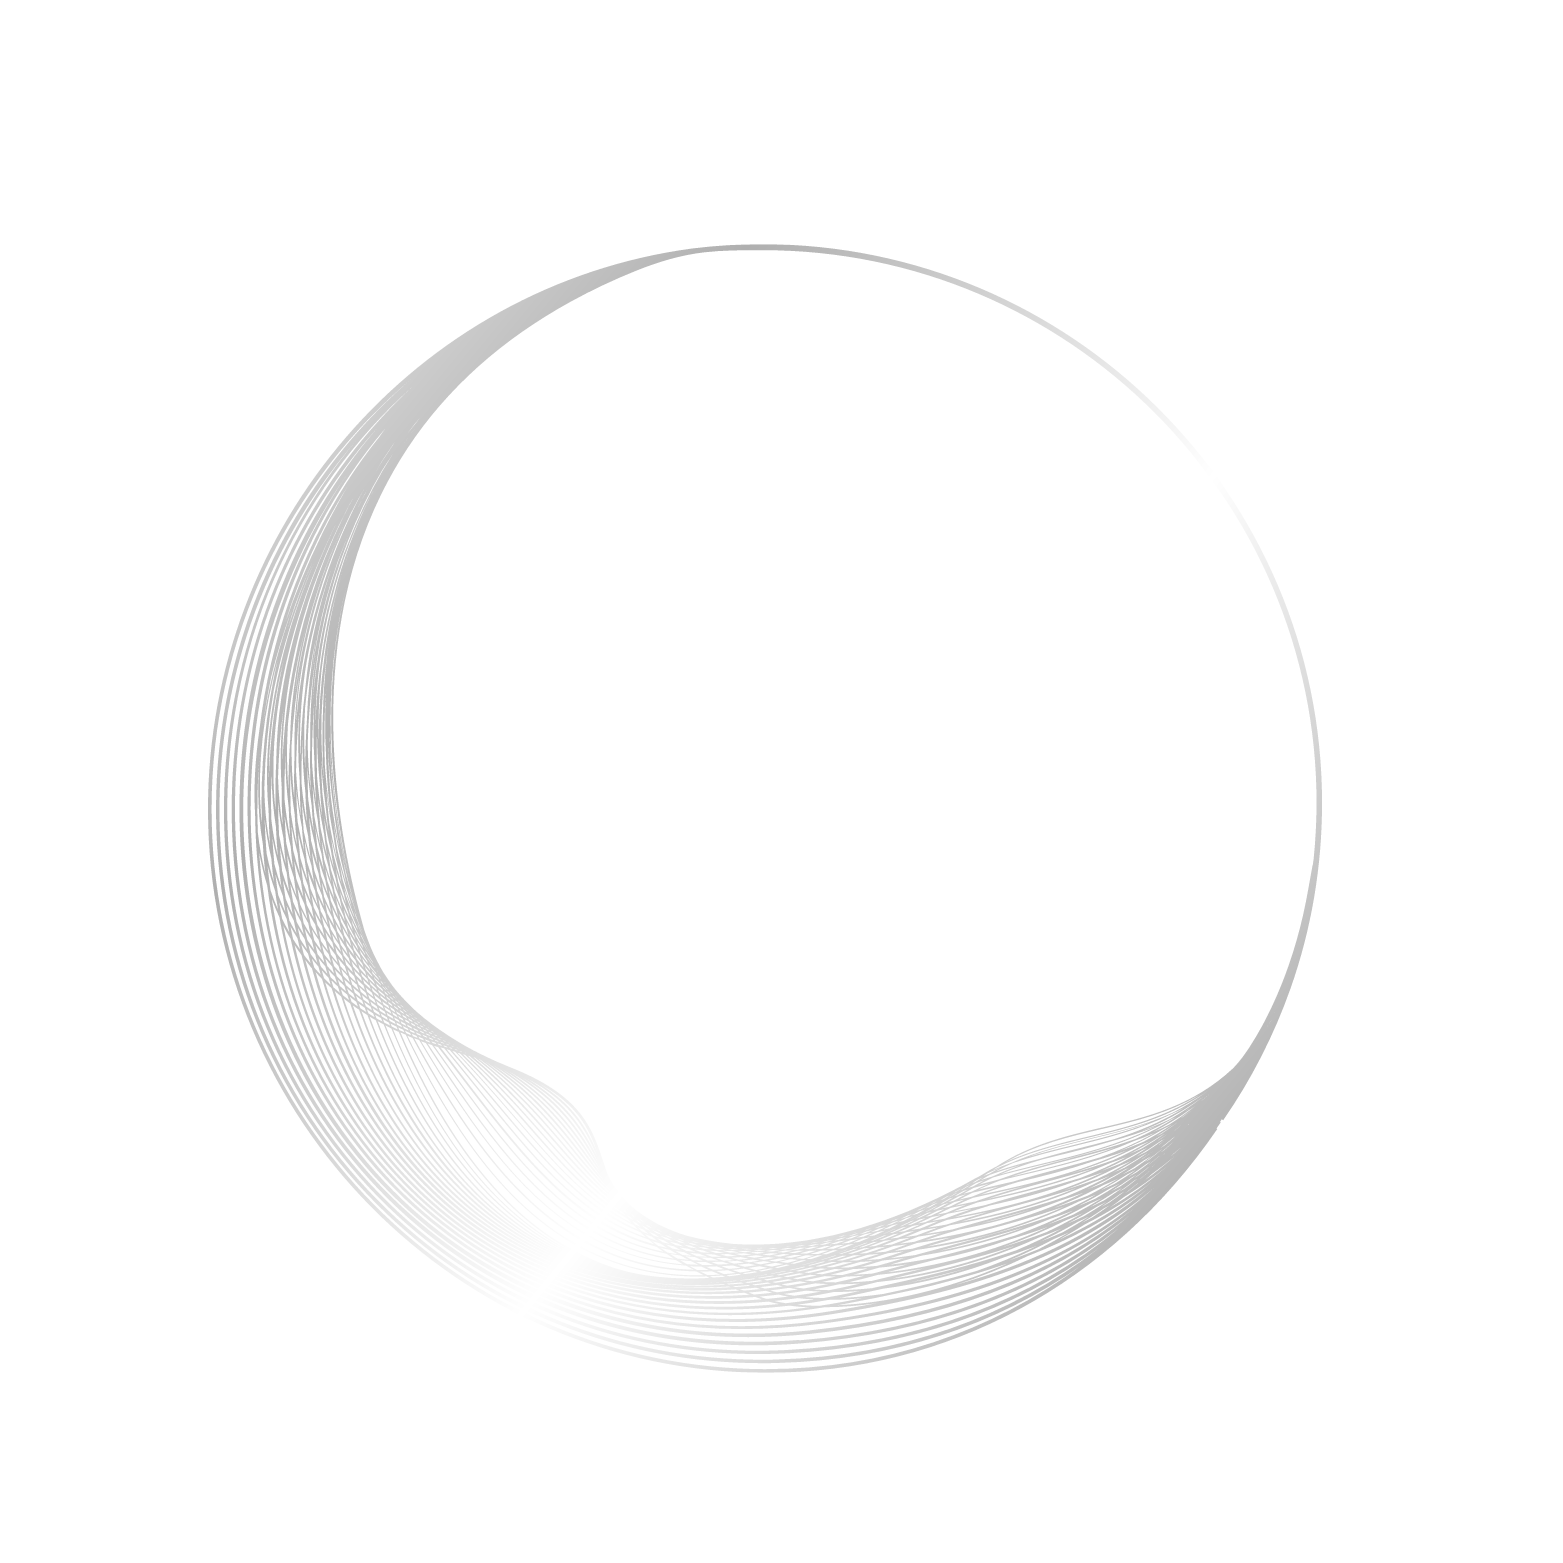 Adzen Digital Marketing Agency